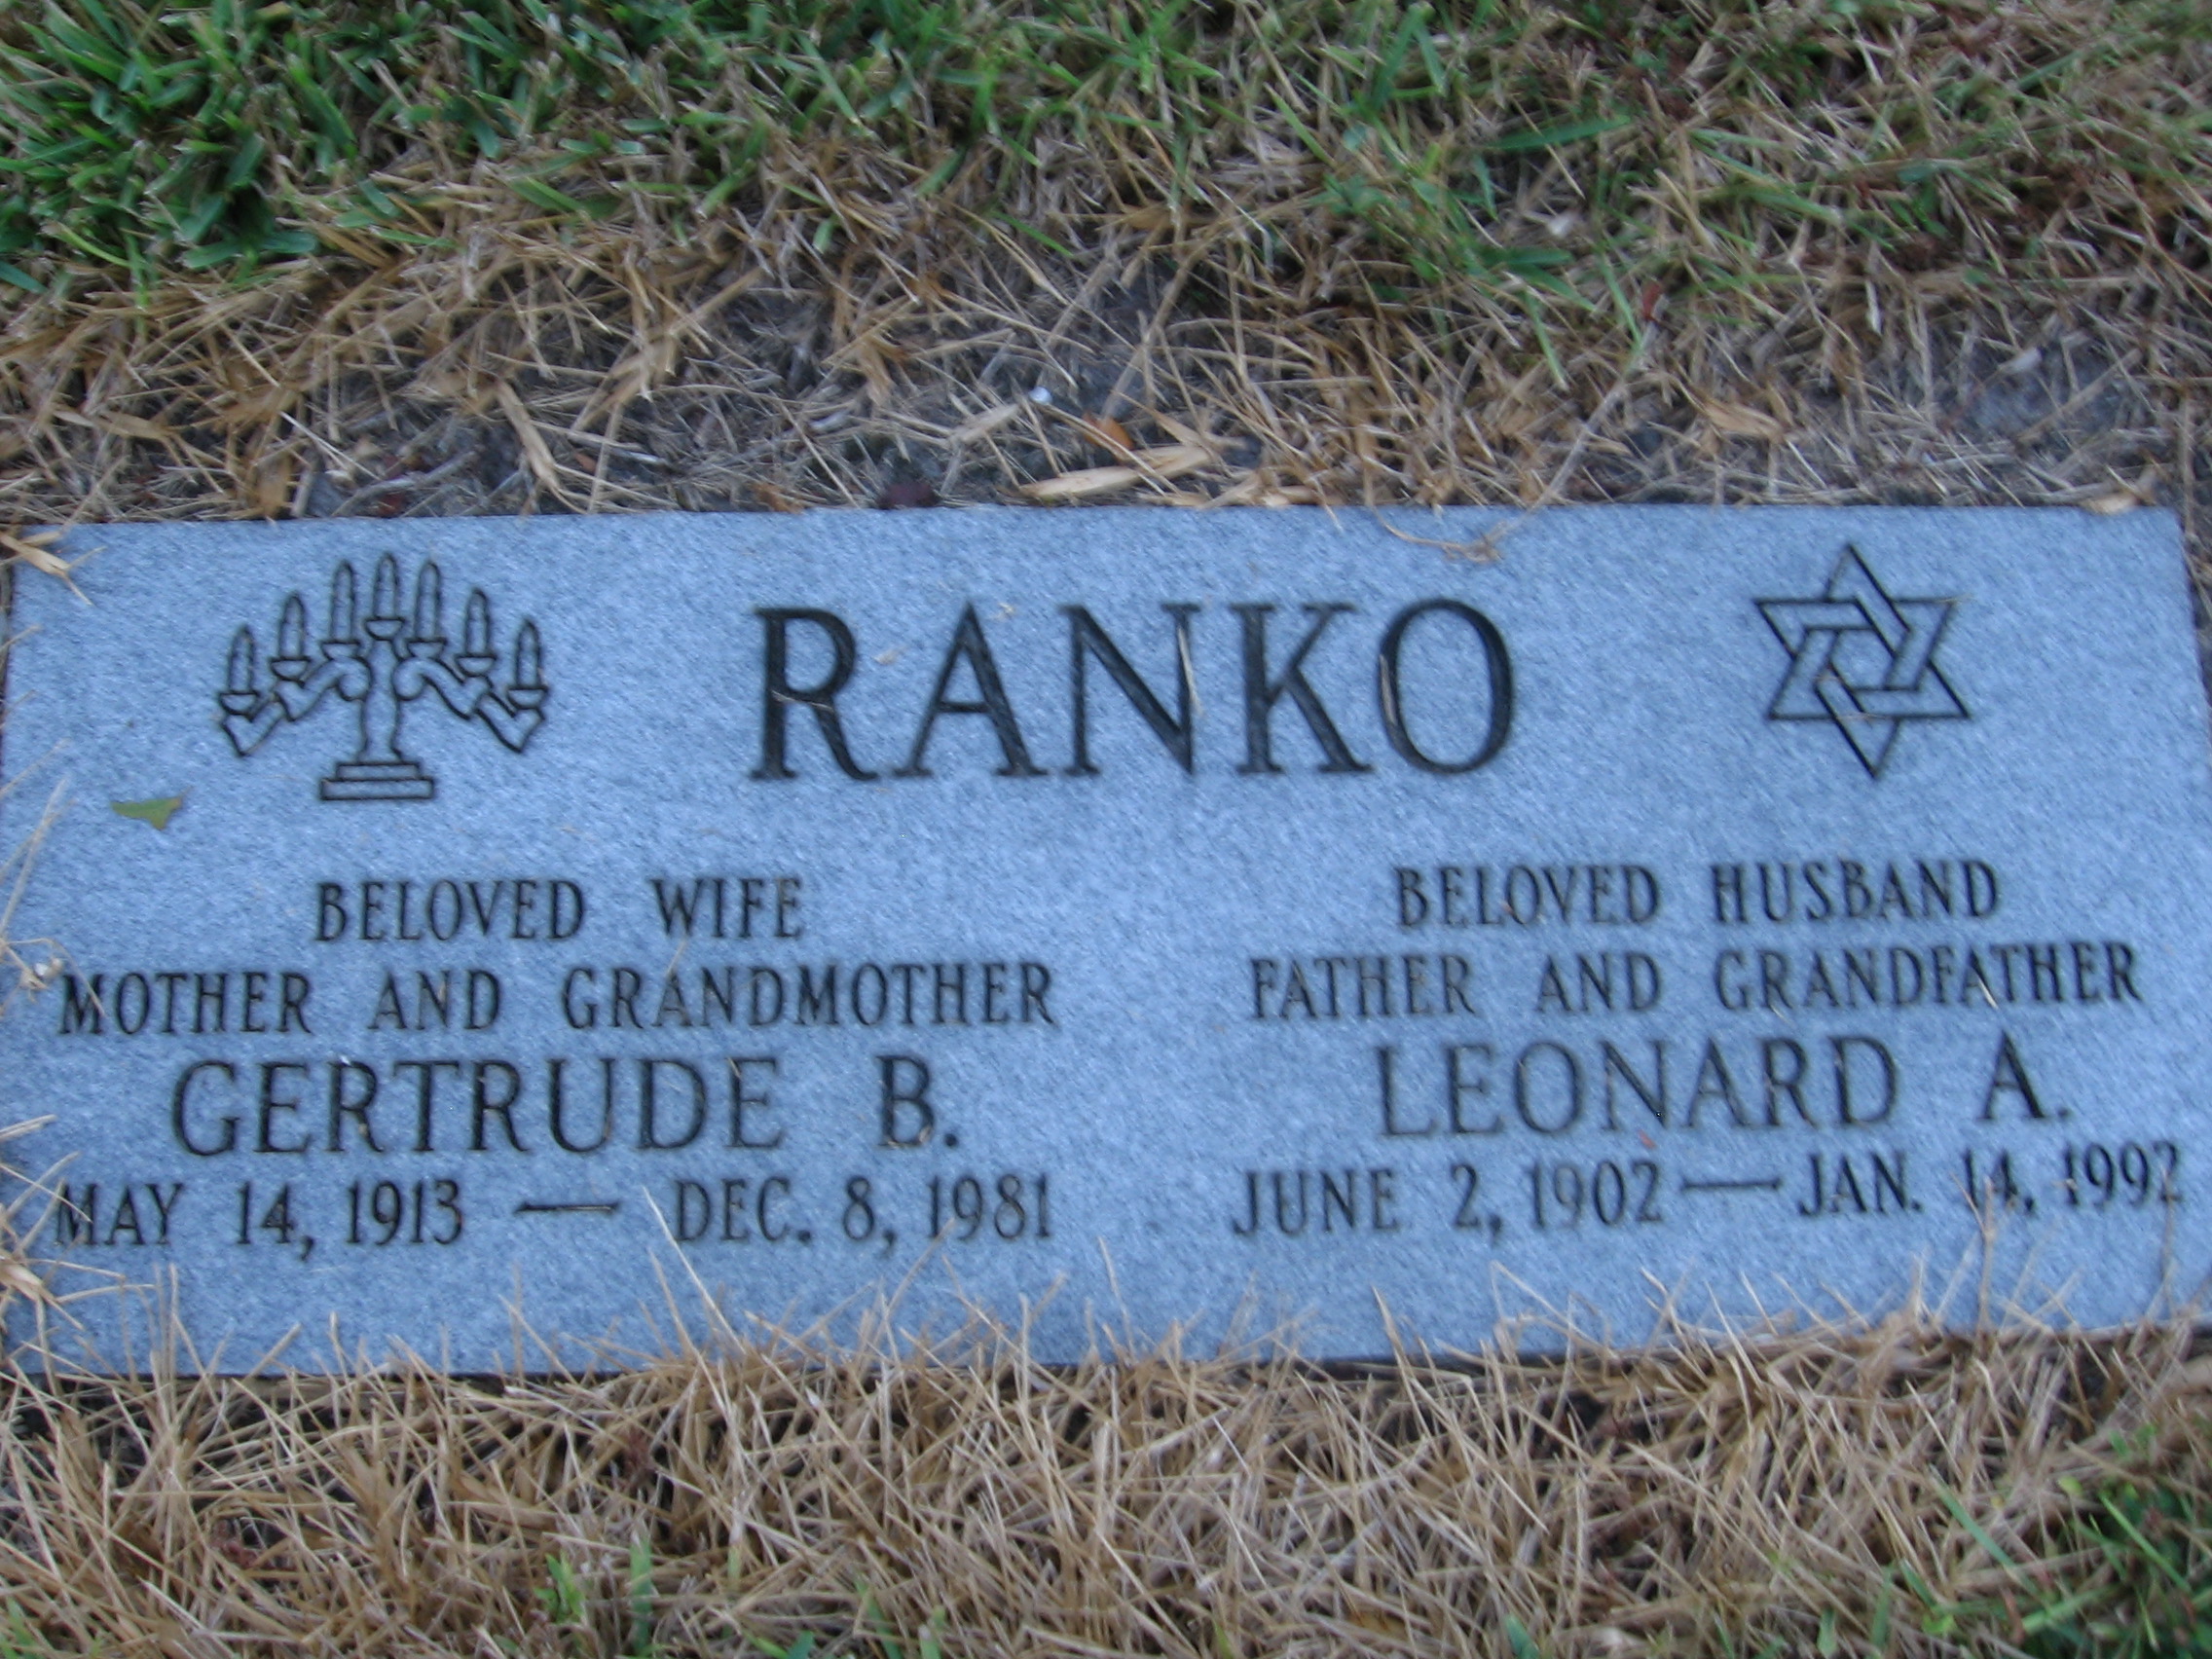 Gertrude B Ranko